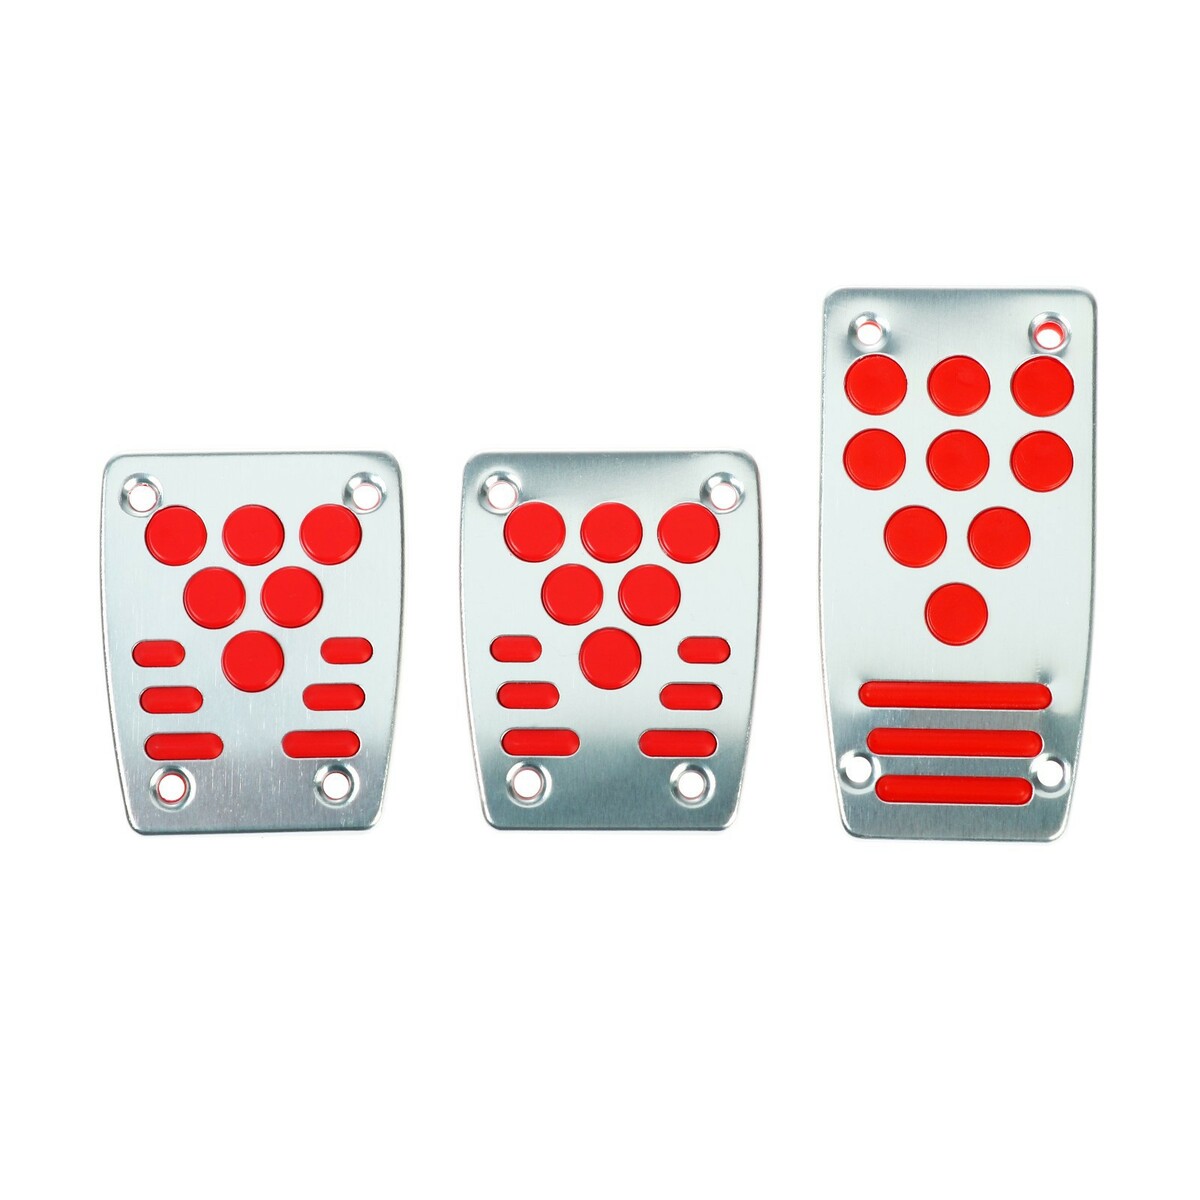 Накладки на педали cartage, антискользящие, набор 3 шт. серебристо-красный накладки на руки